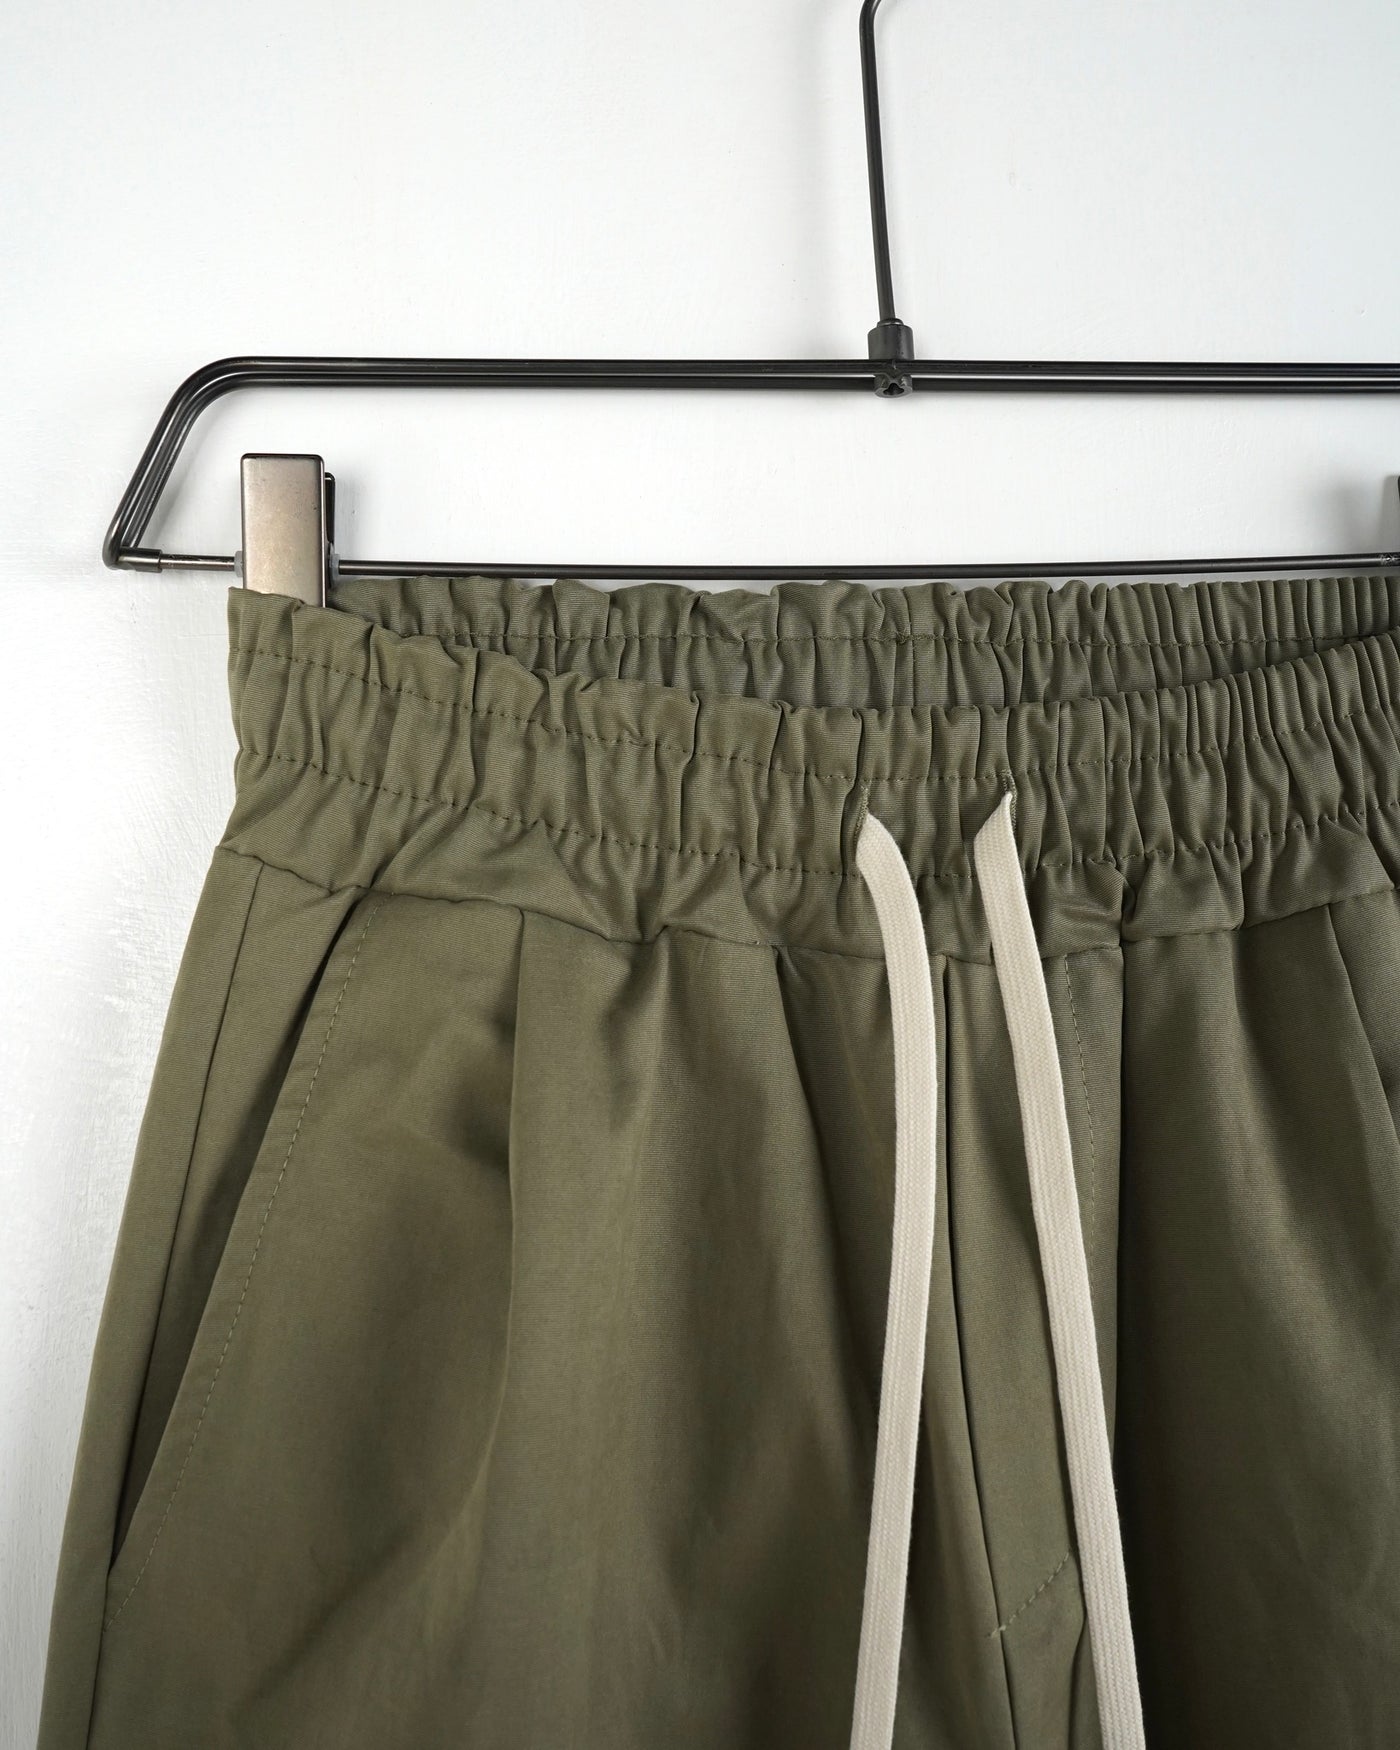 pantalone an015201